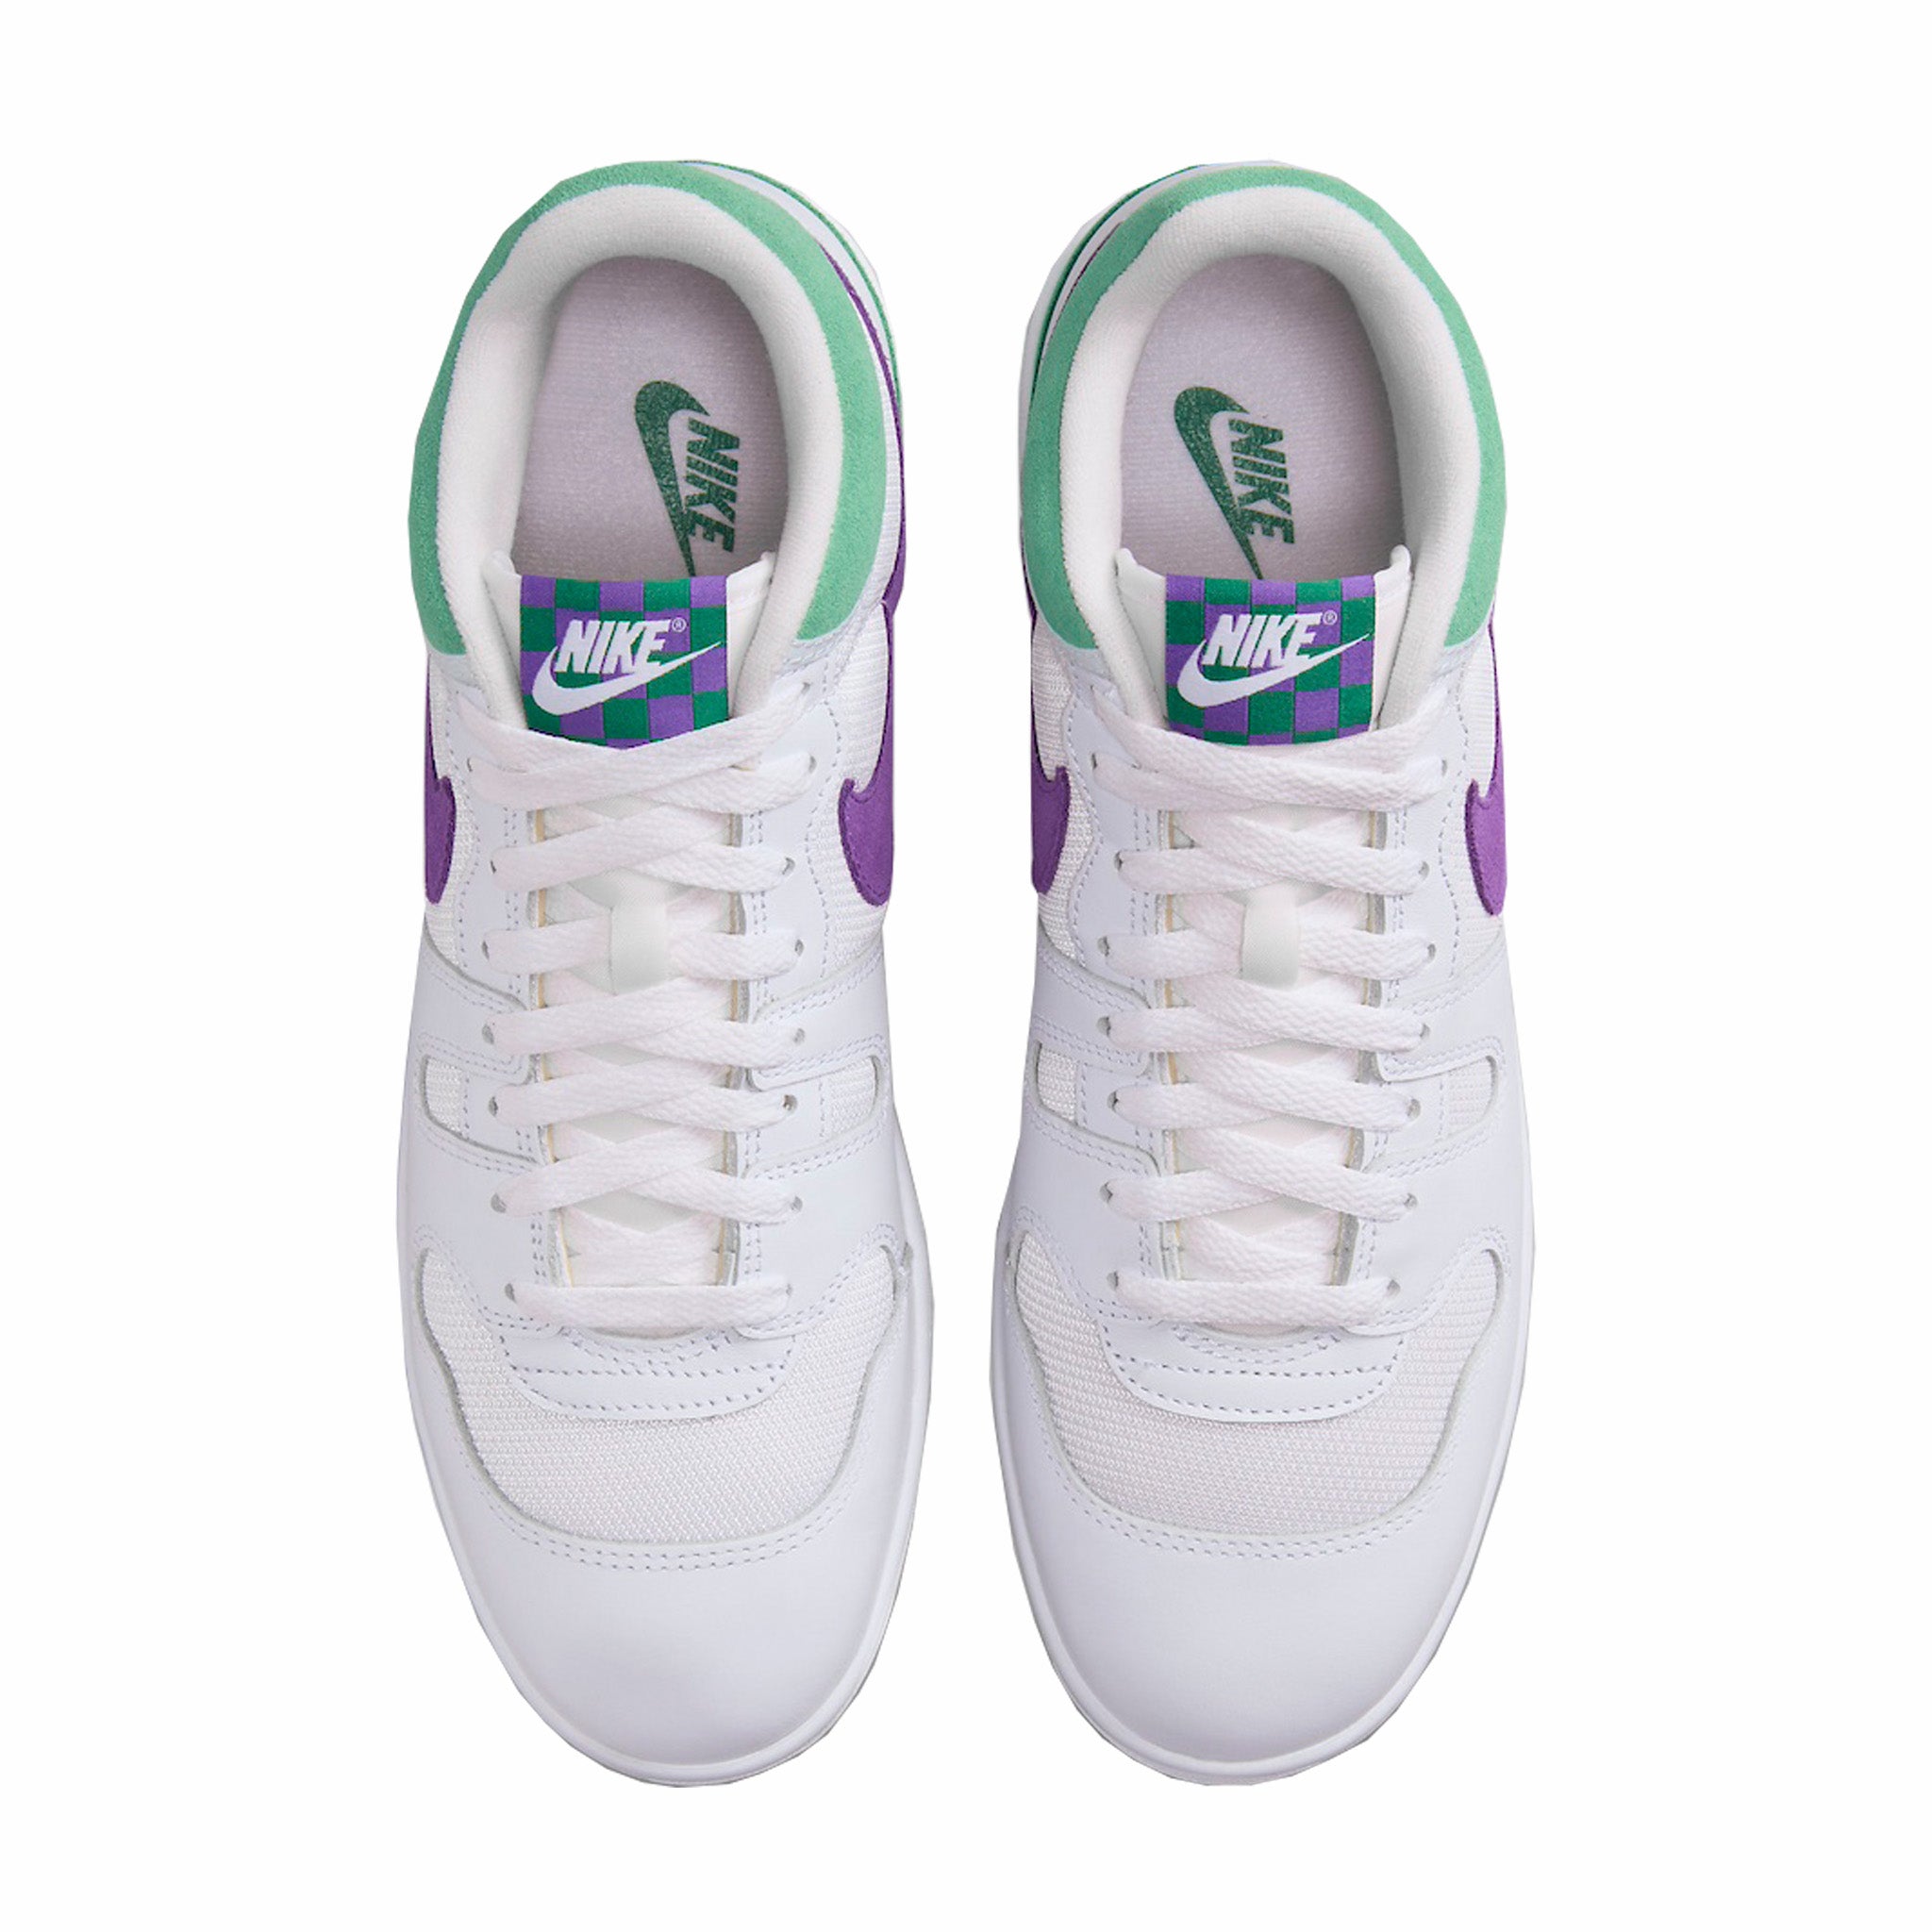 Nike Mac Attack &quot;Wimbledon&quot; (White/Hype Grape-Court Green) - August Shop